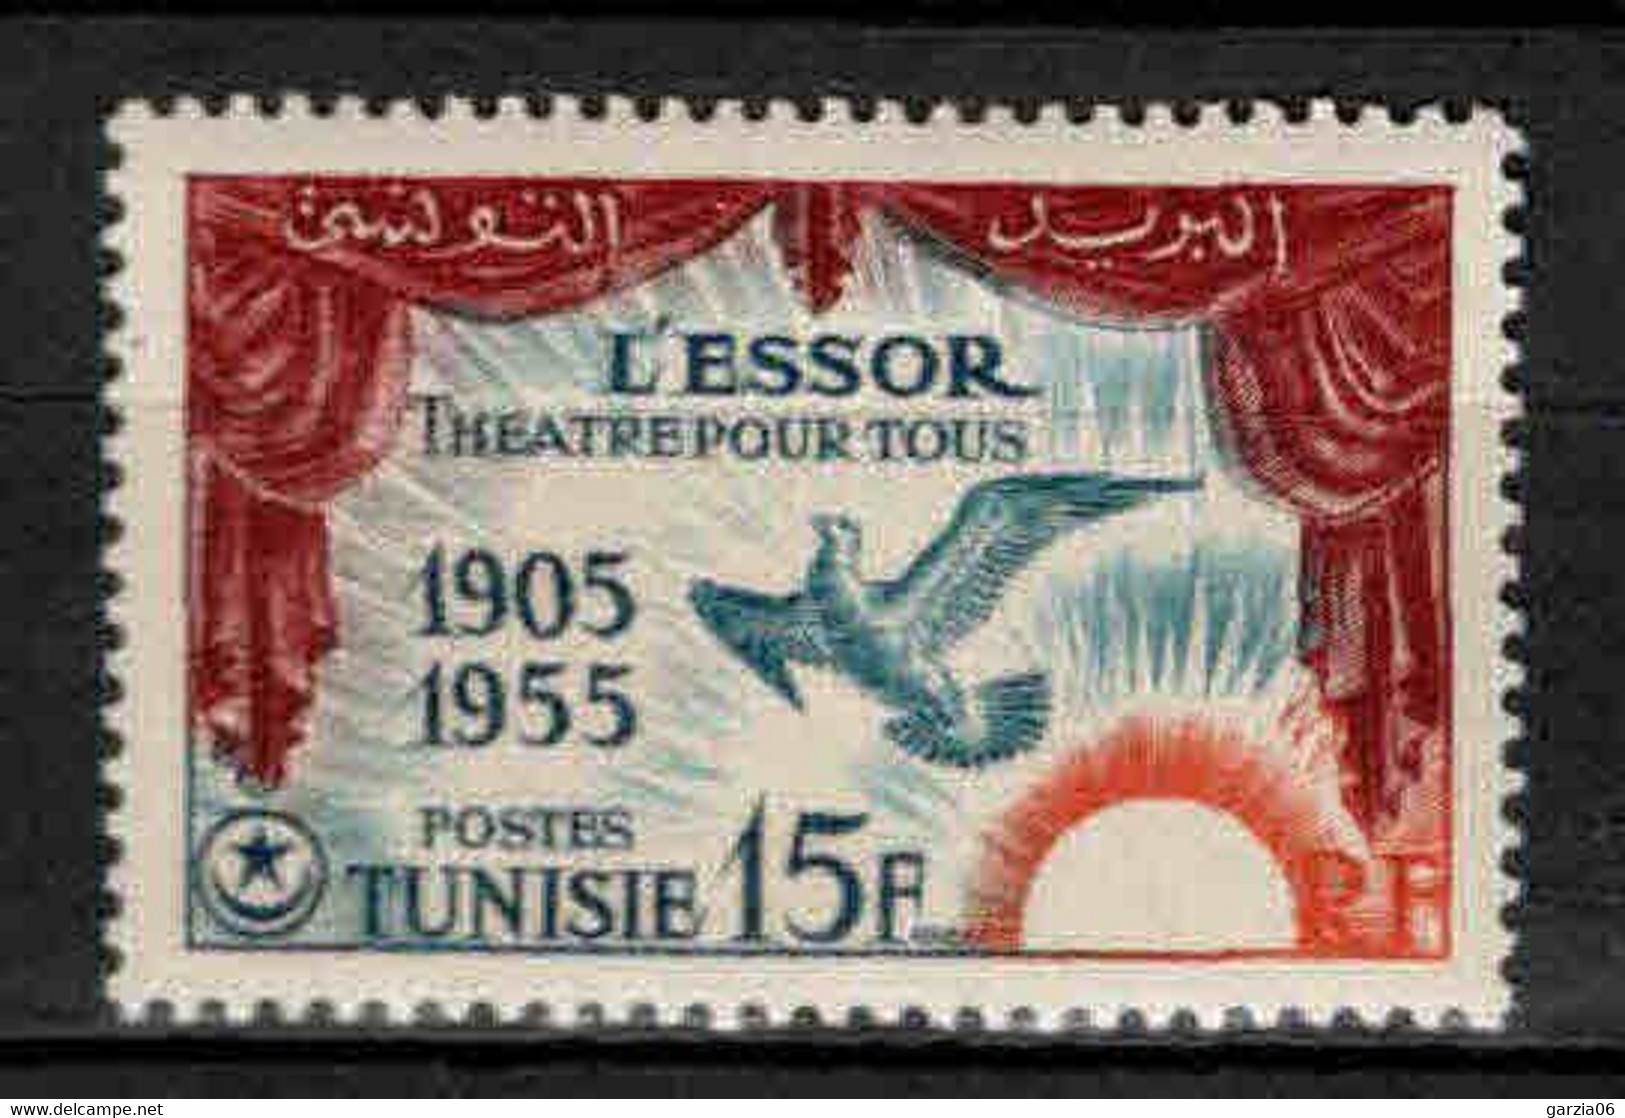 Tunisie - 1955  - Essor - N°389 - Neufs** - MNH - - Unused Stamps